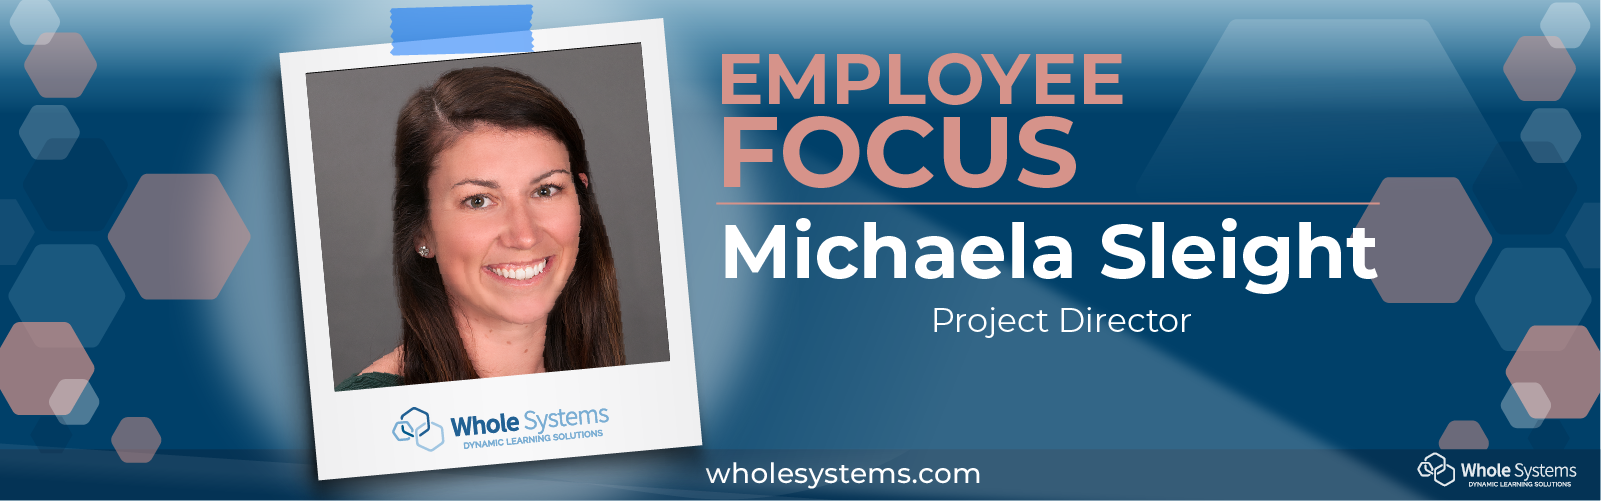 Employee-focus-Michaela